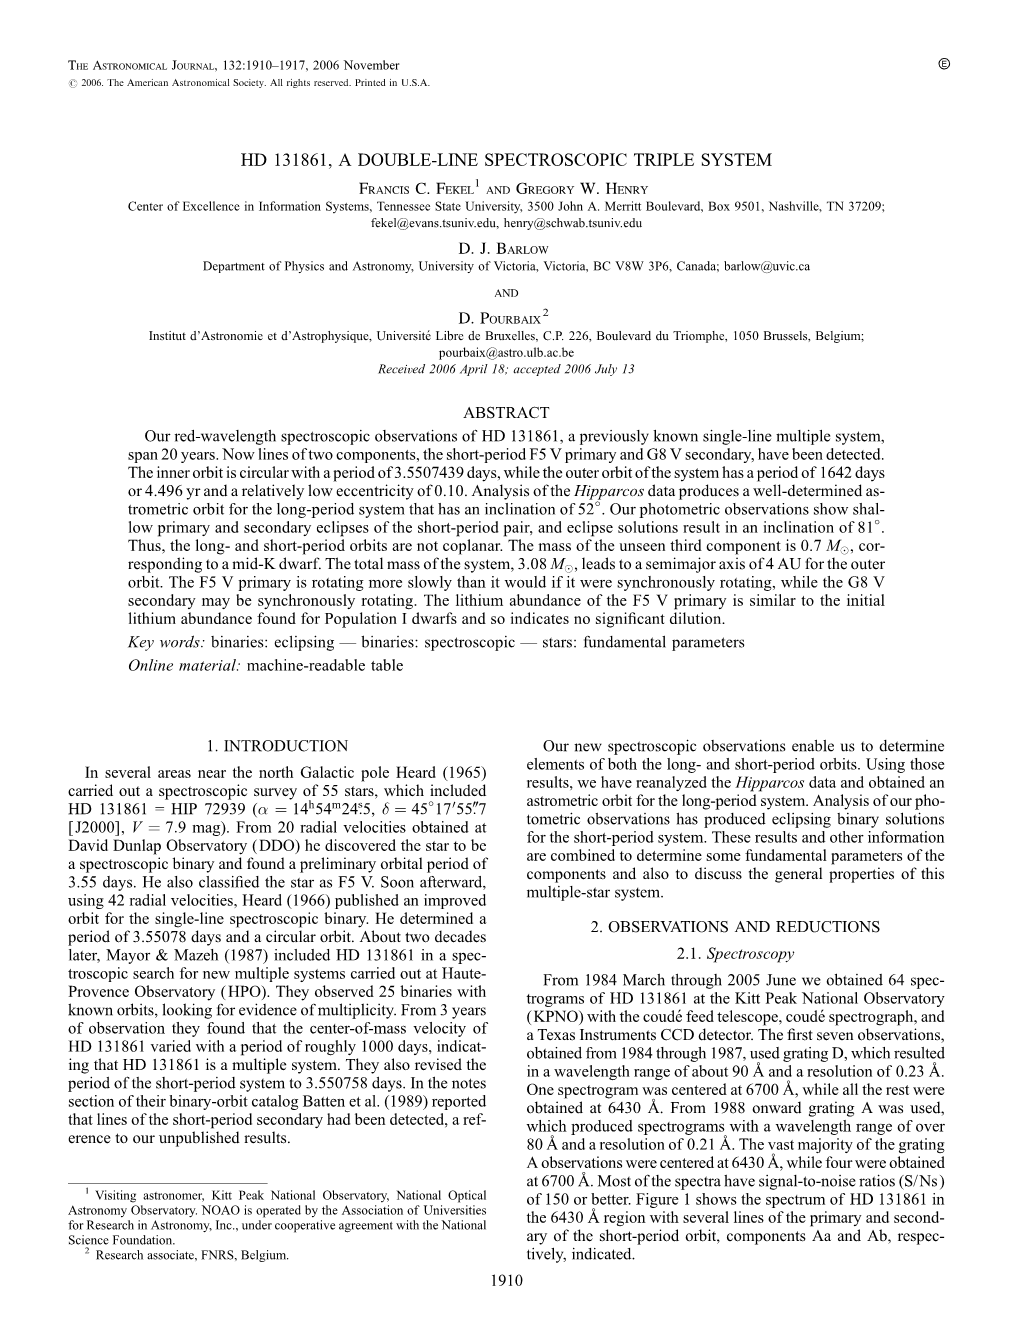 PDF, HD 131861, a Double-Line Spectroscopic Triple System